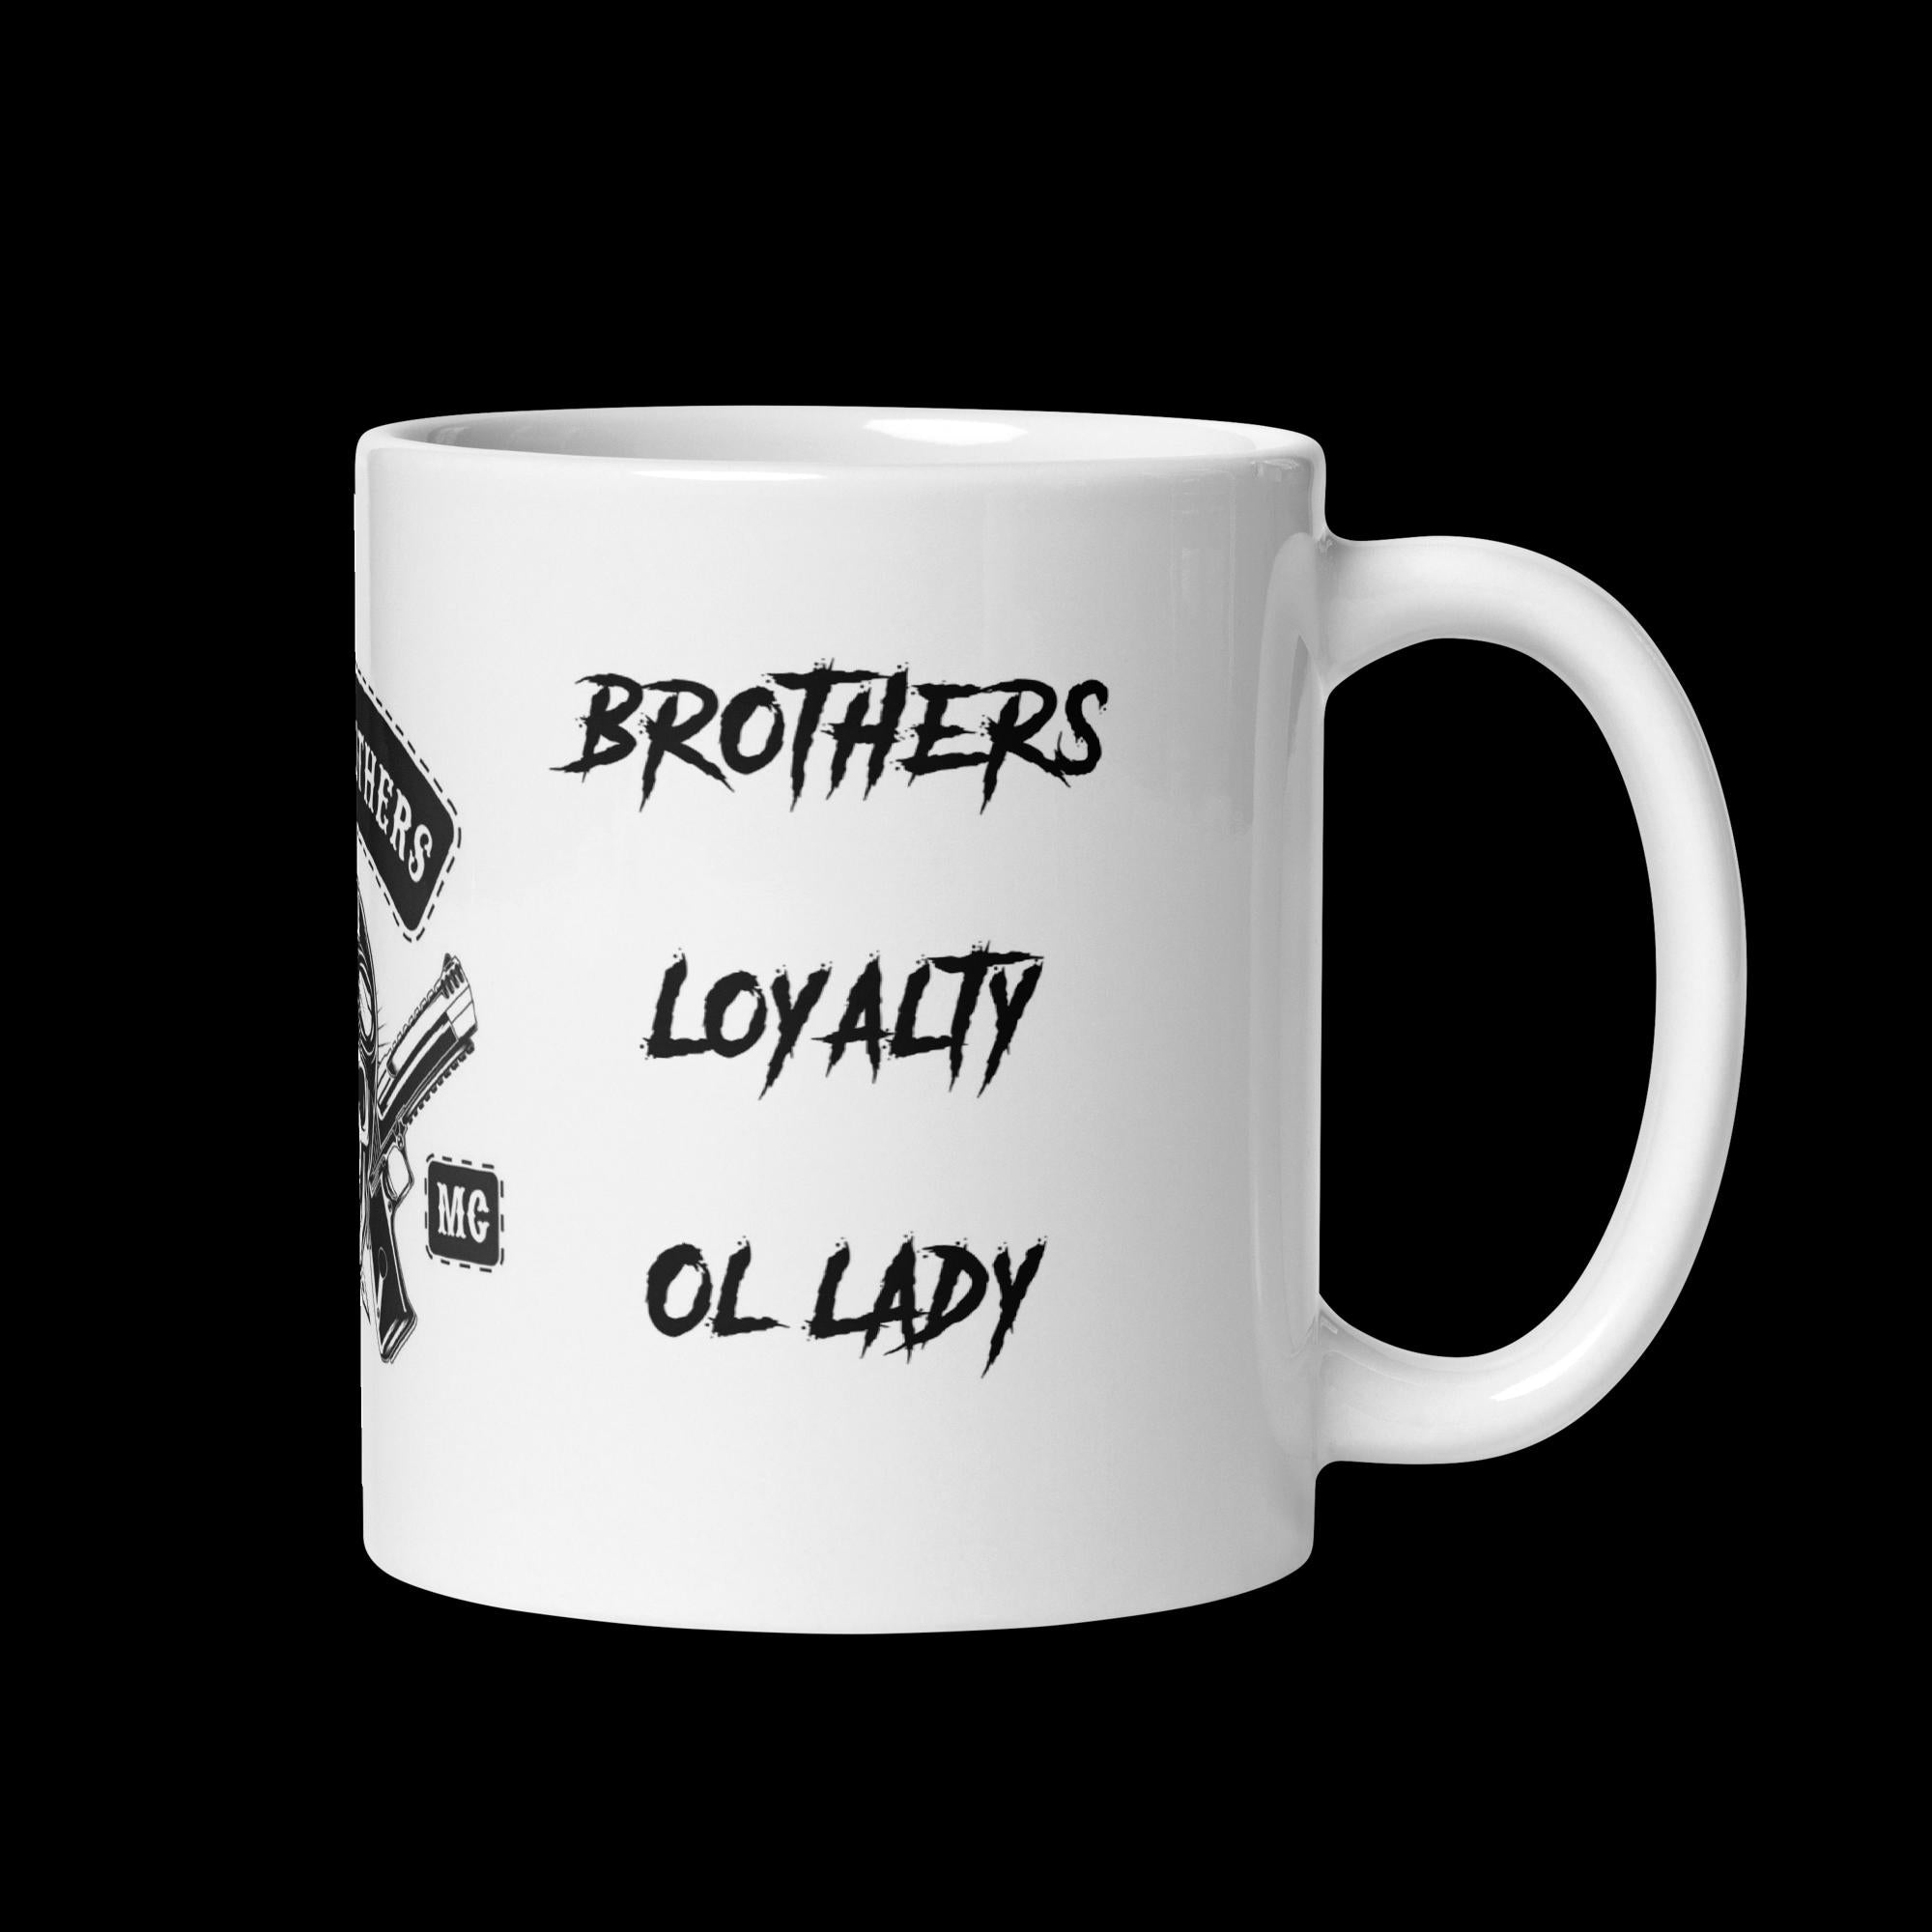 War Brothers MC mug